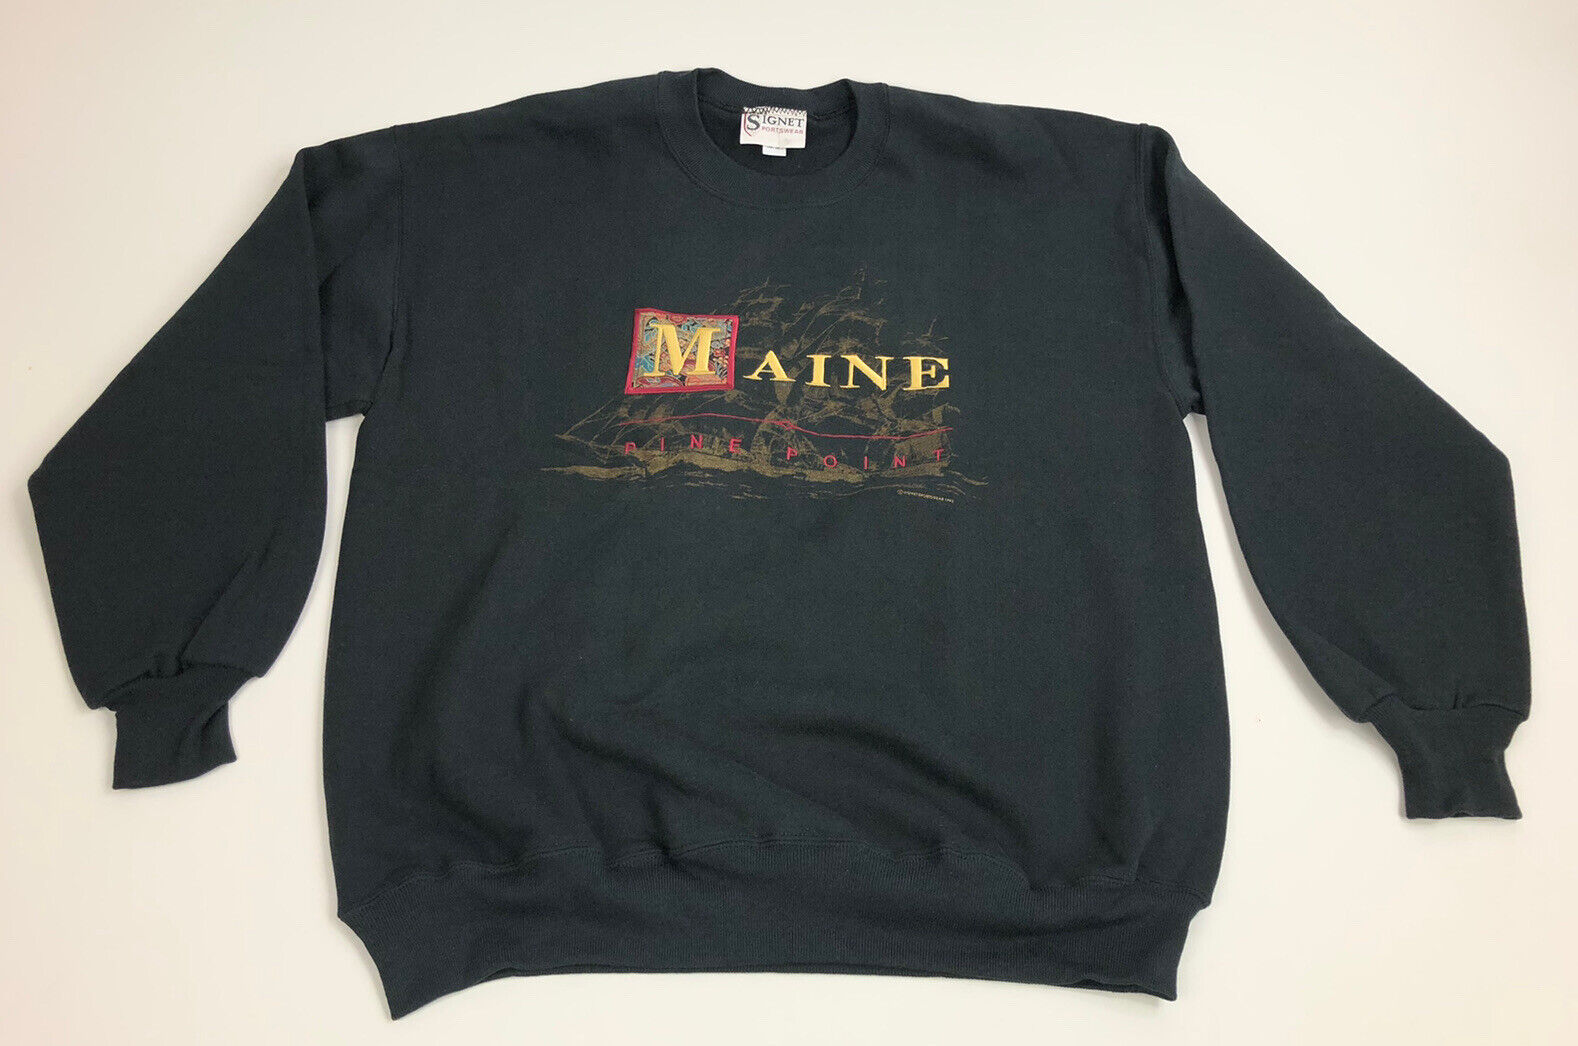 Vintage Signet Label Black MAINE - Pine Point Sweatshirt 1993 new old stock XL